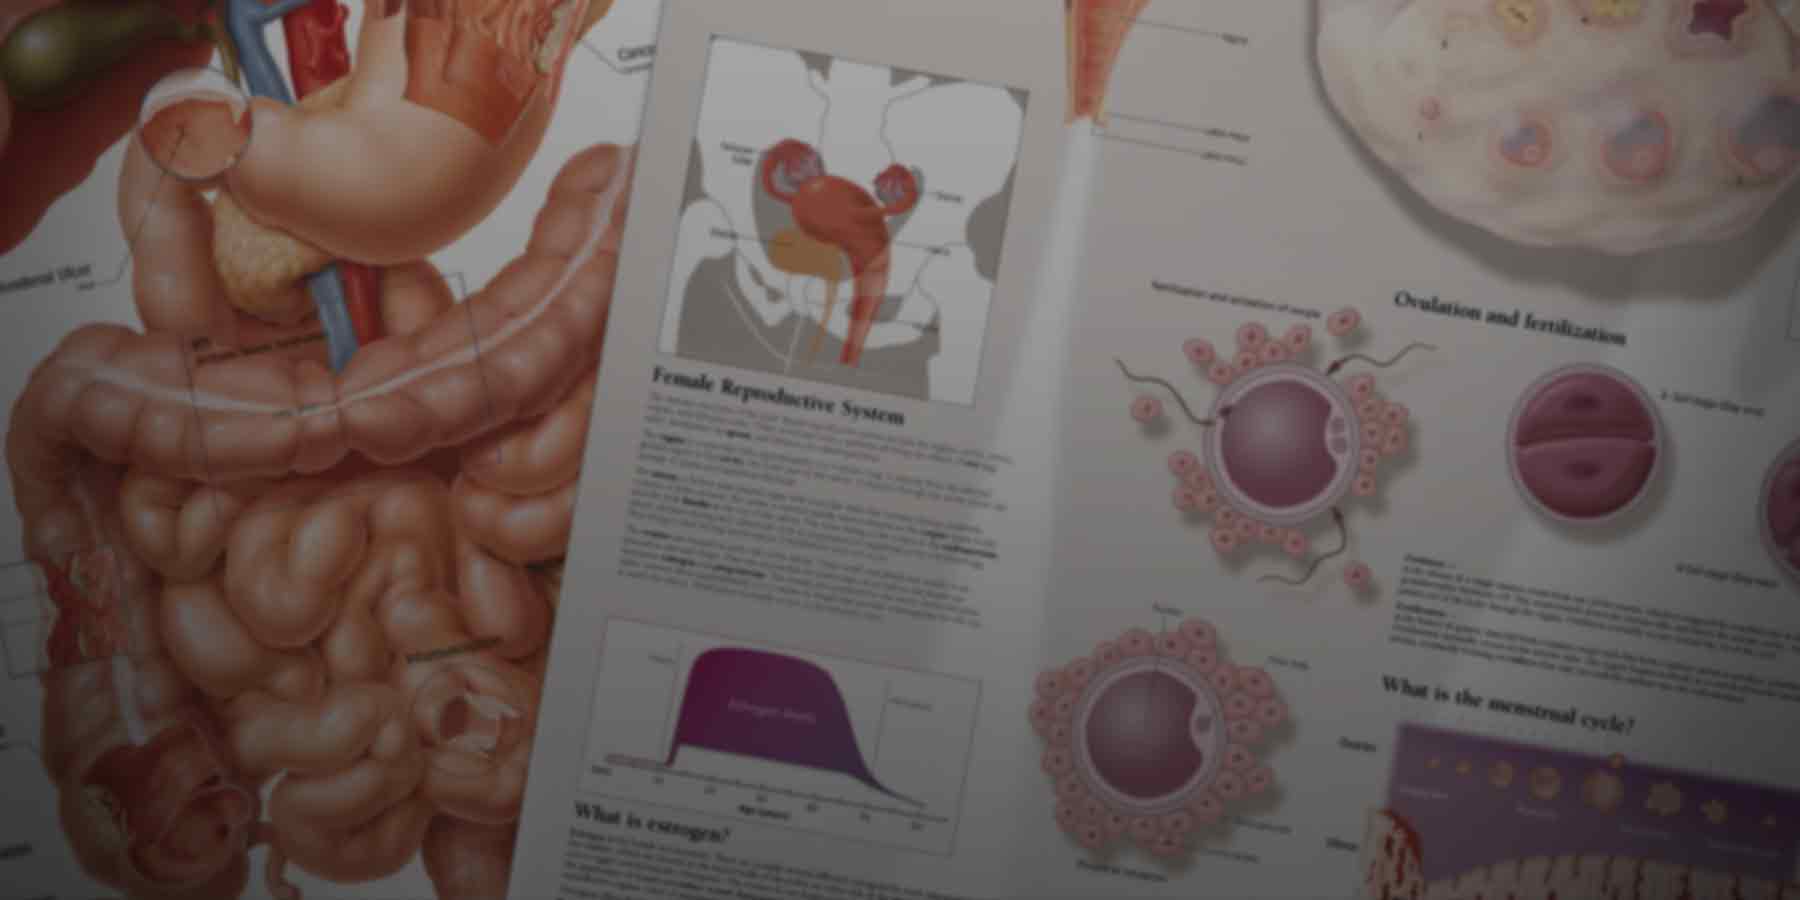 Human anatomy posters